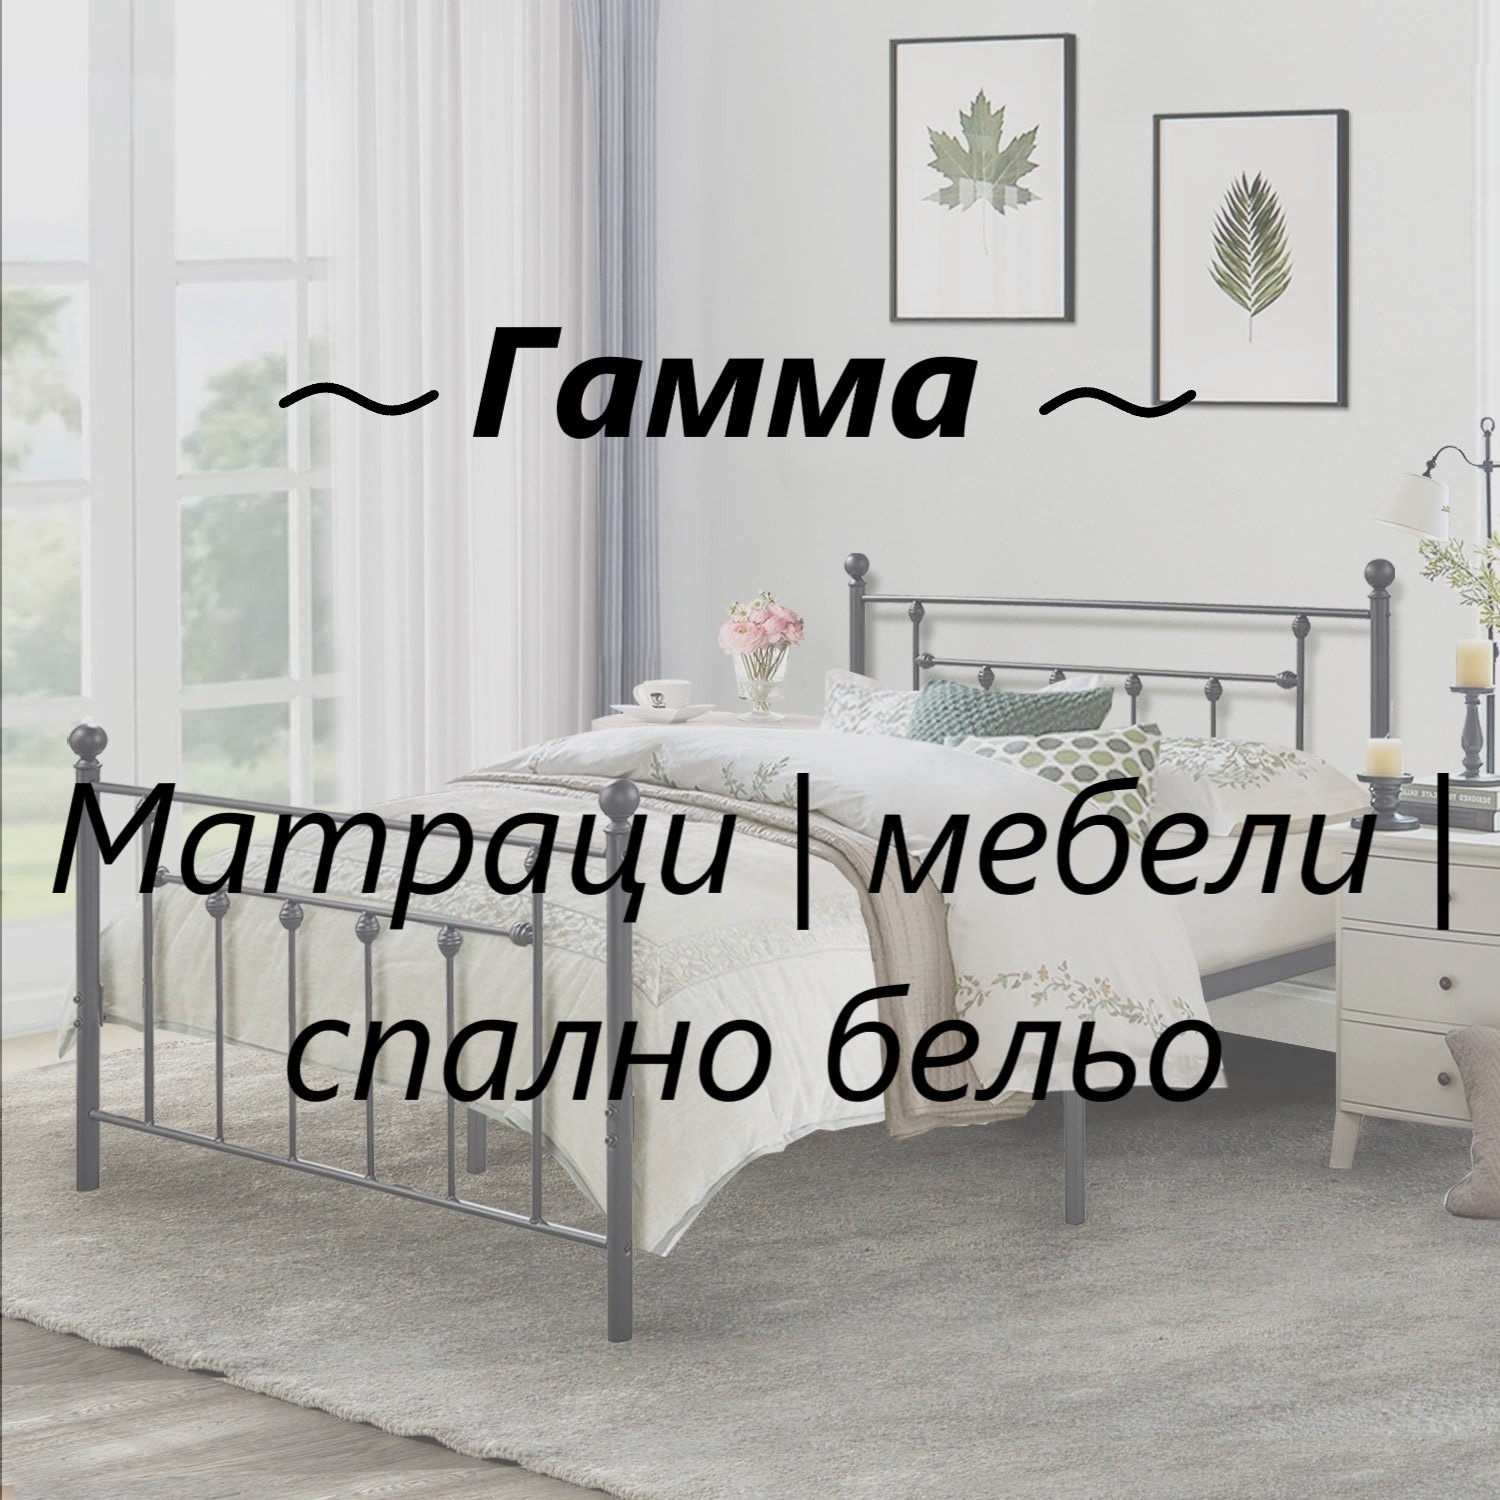 Image for "Гамма" | Mатраци, мебели, спално бельо, Варна